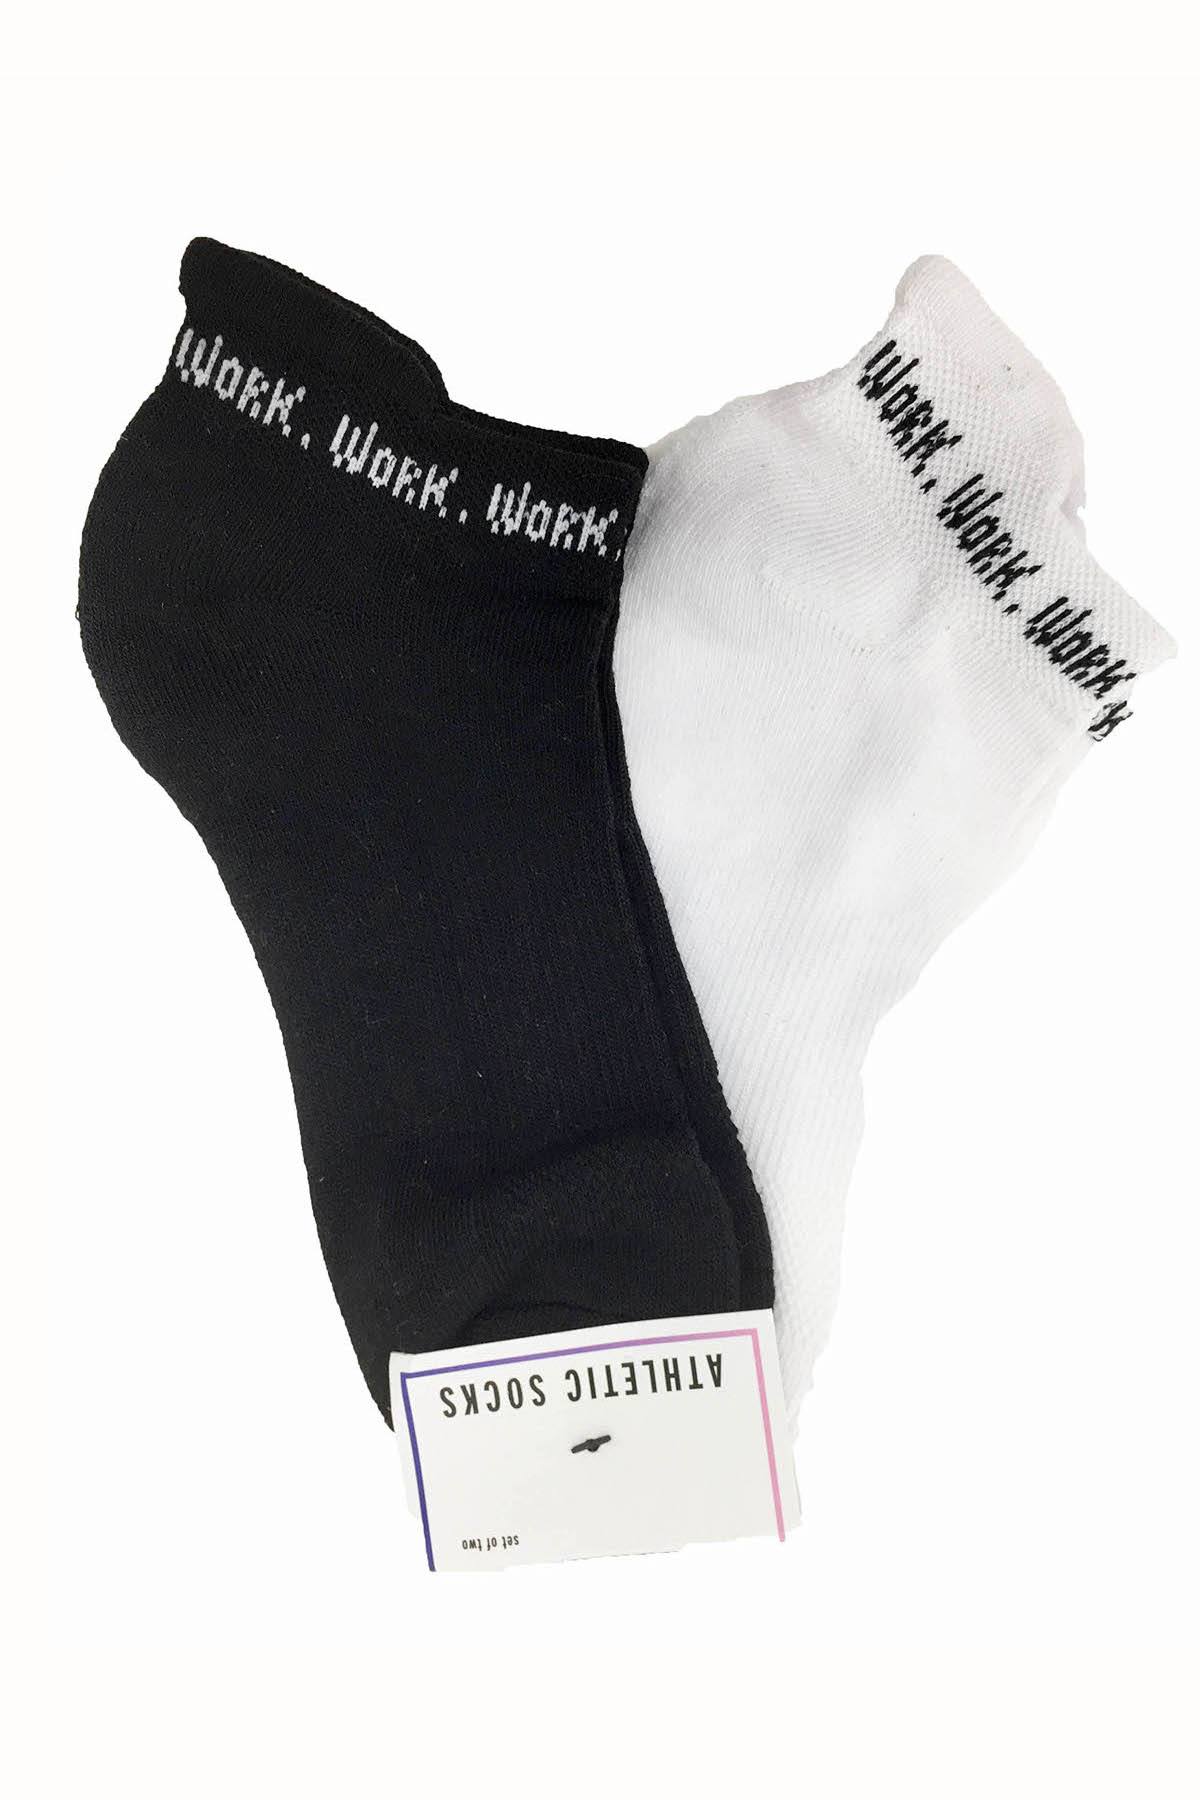 TwelveNYC Black/White Women's Work Work Work Ankle Sock 2-Pack